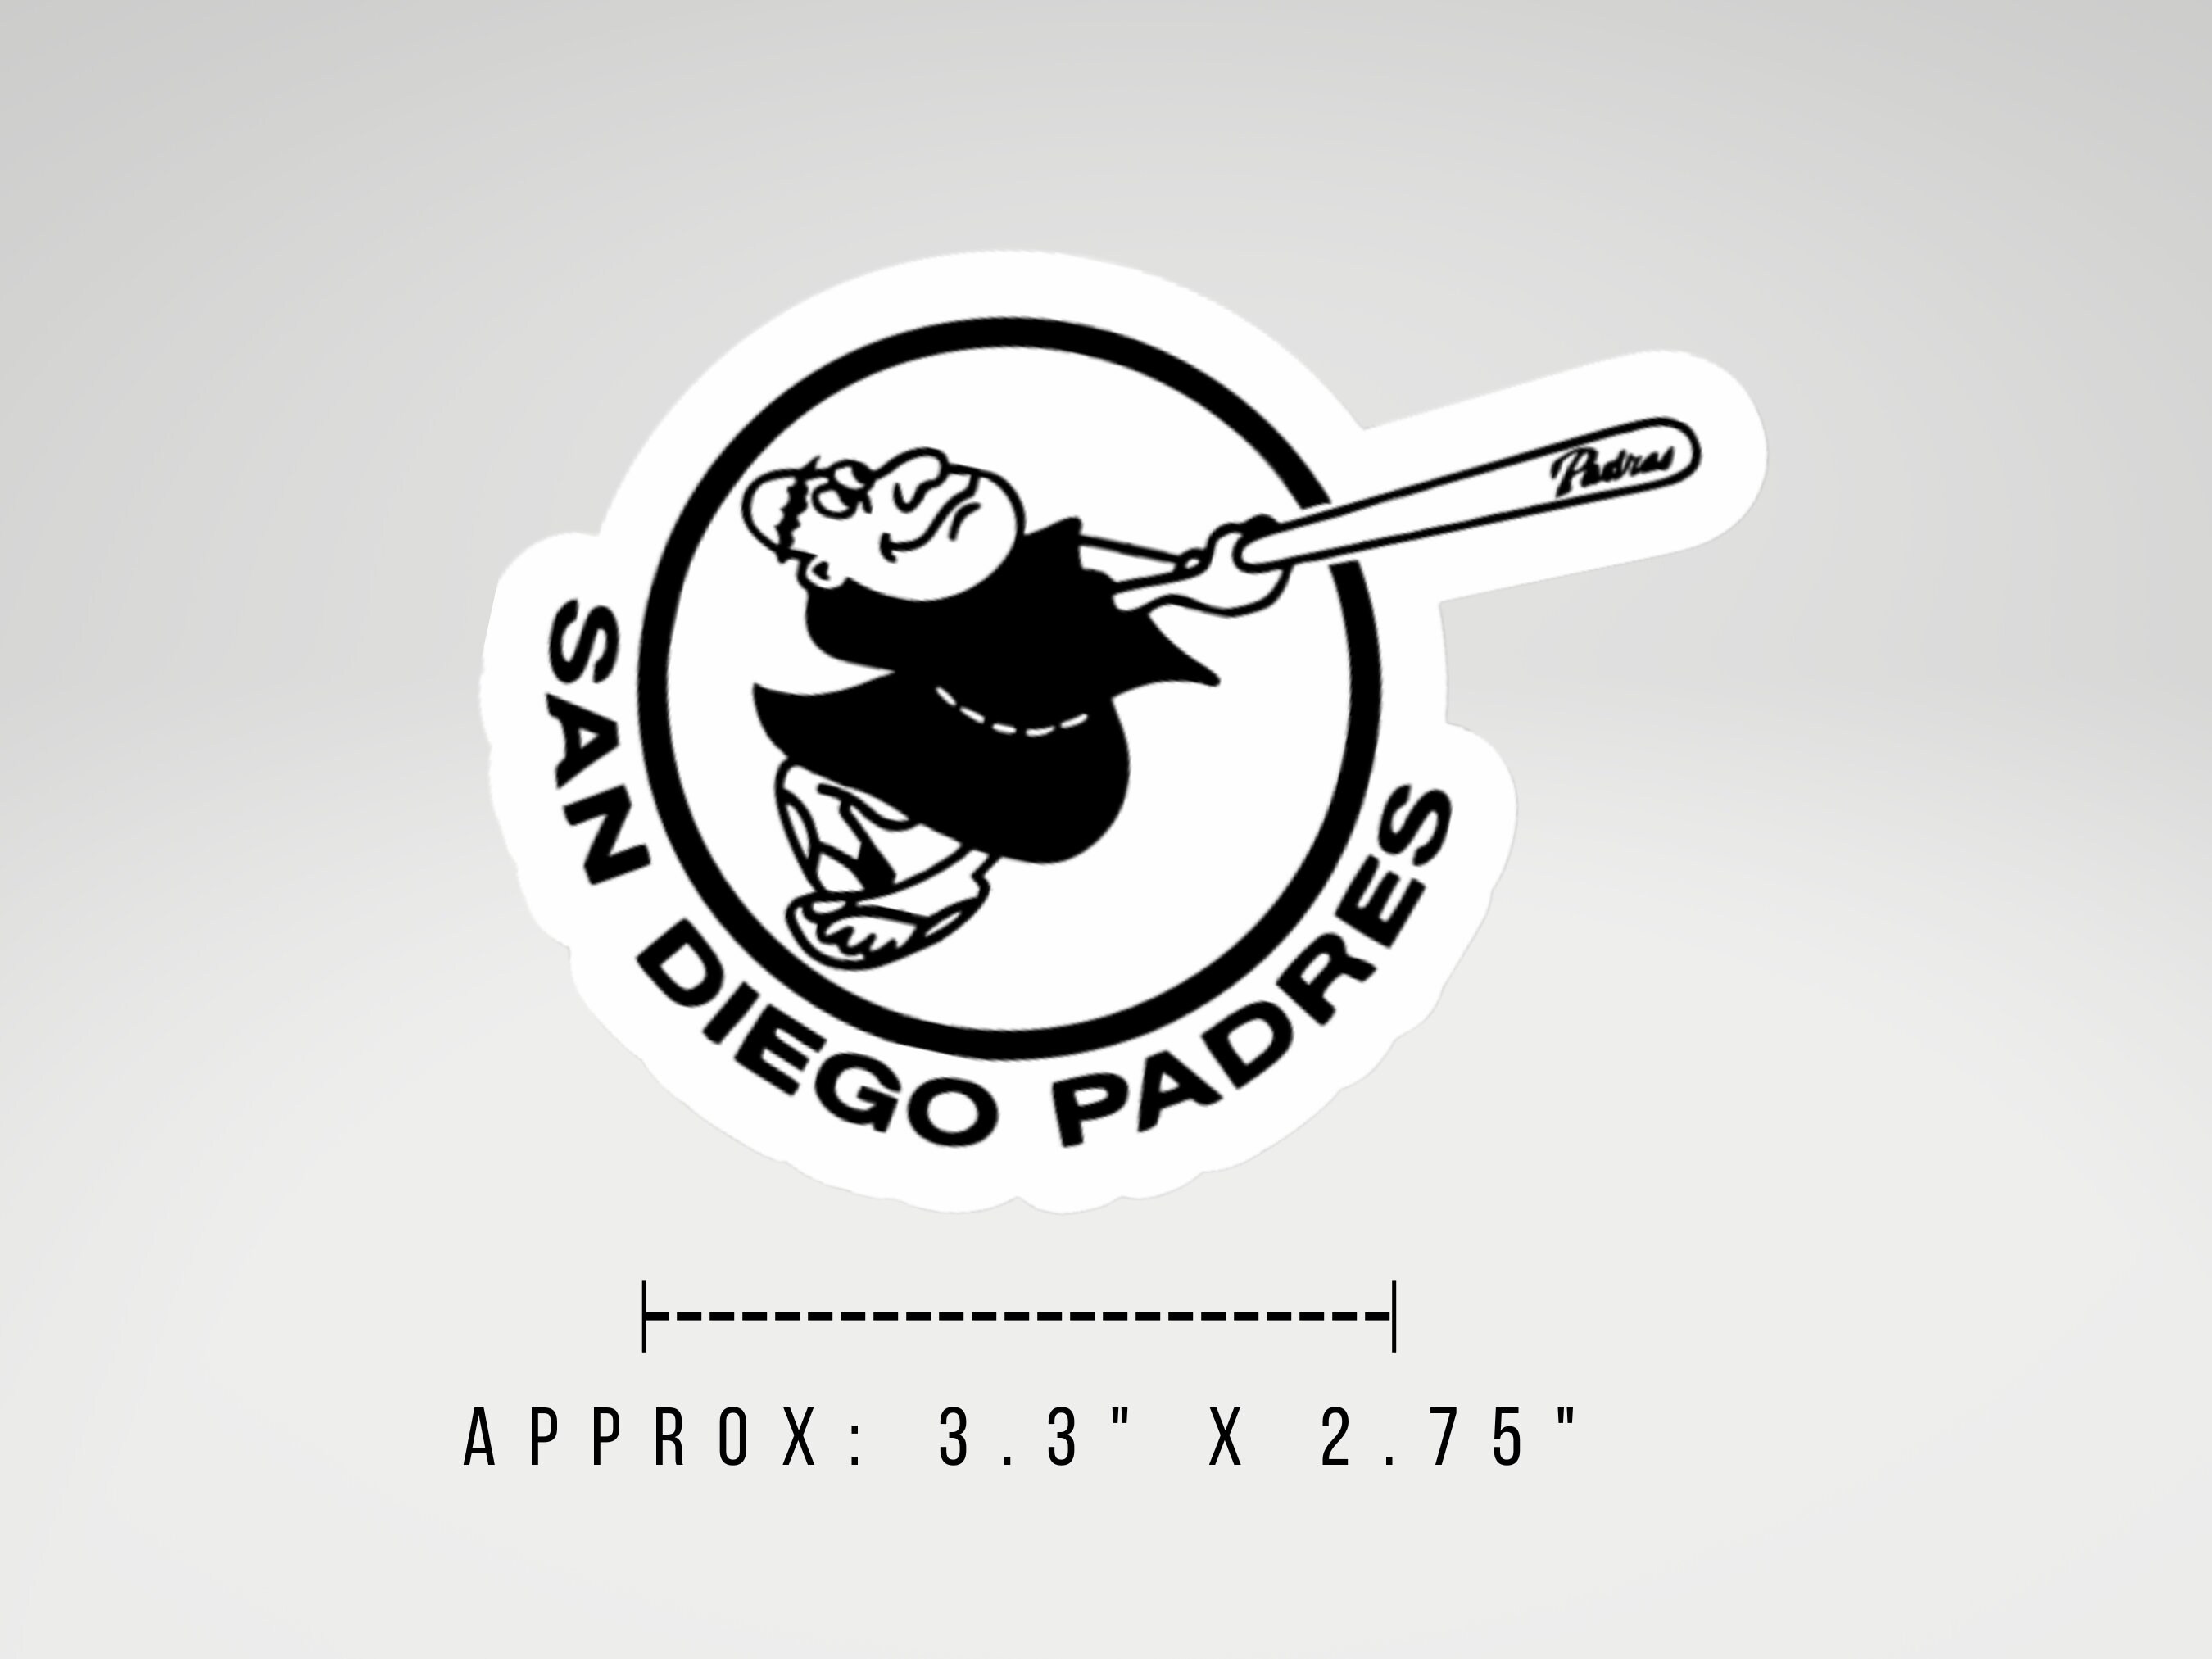 San Diego Vintage Swinging Friar Sticker 